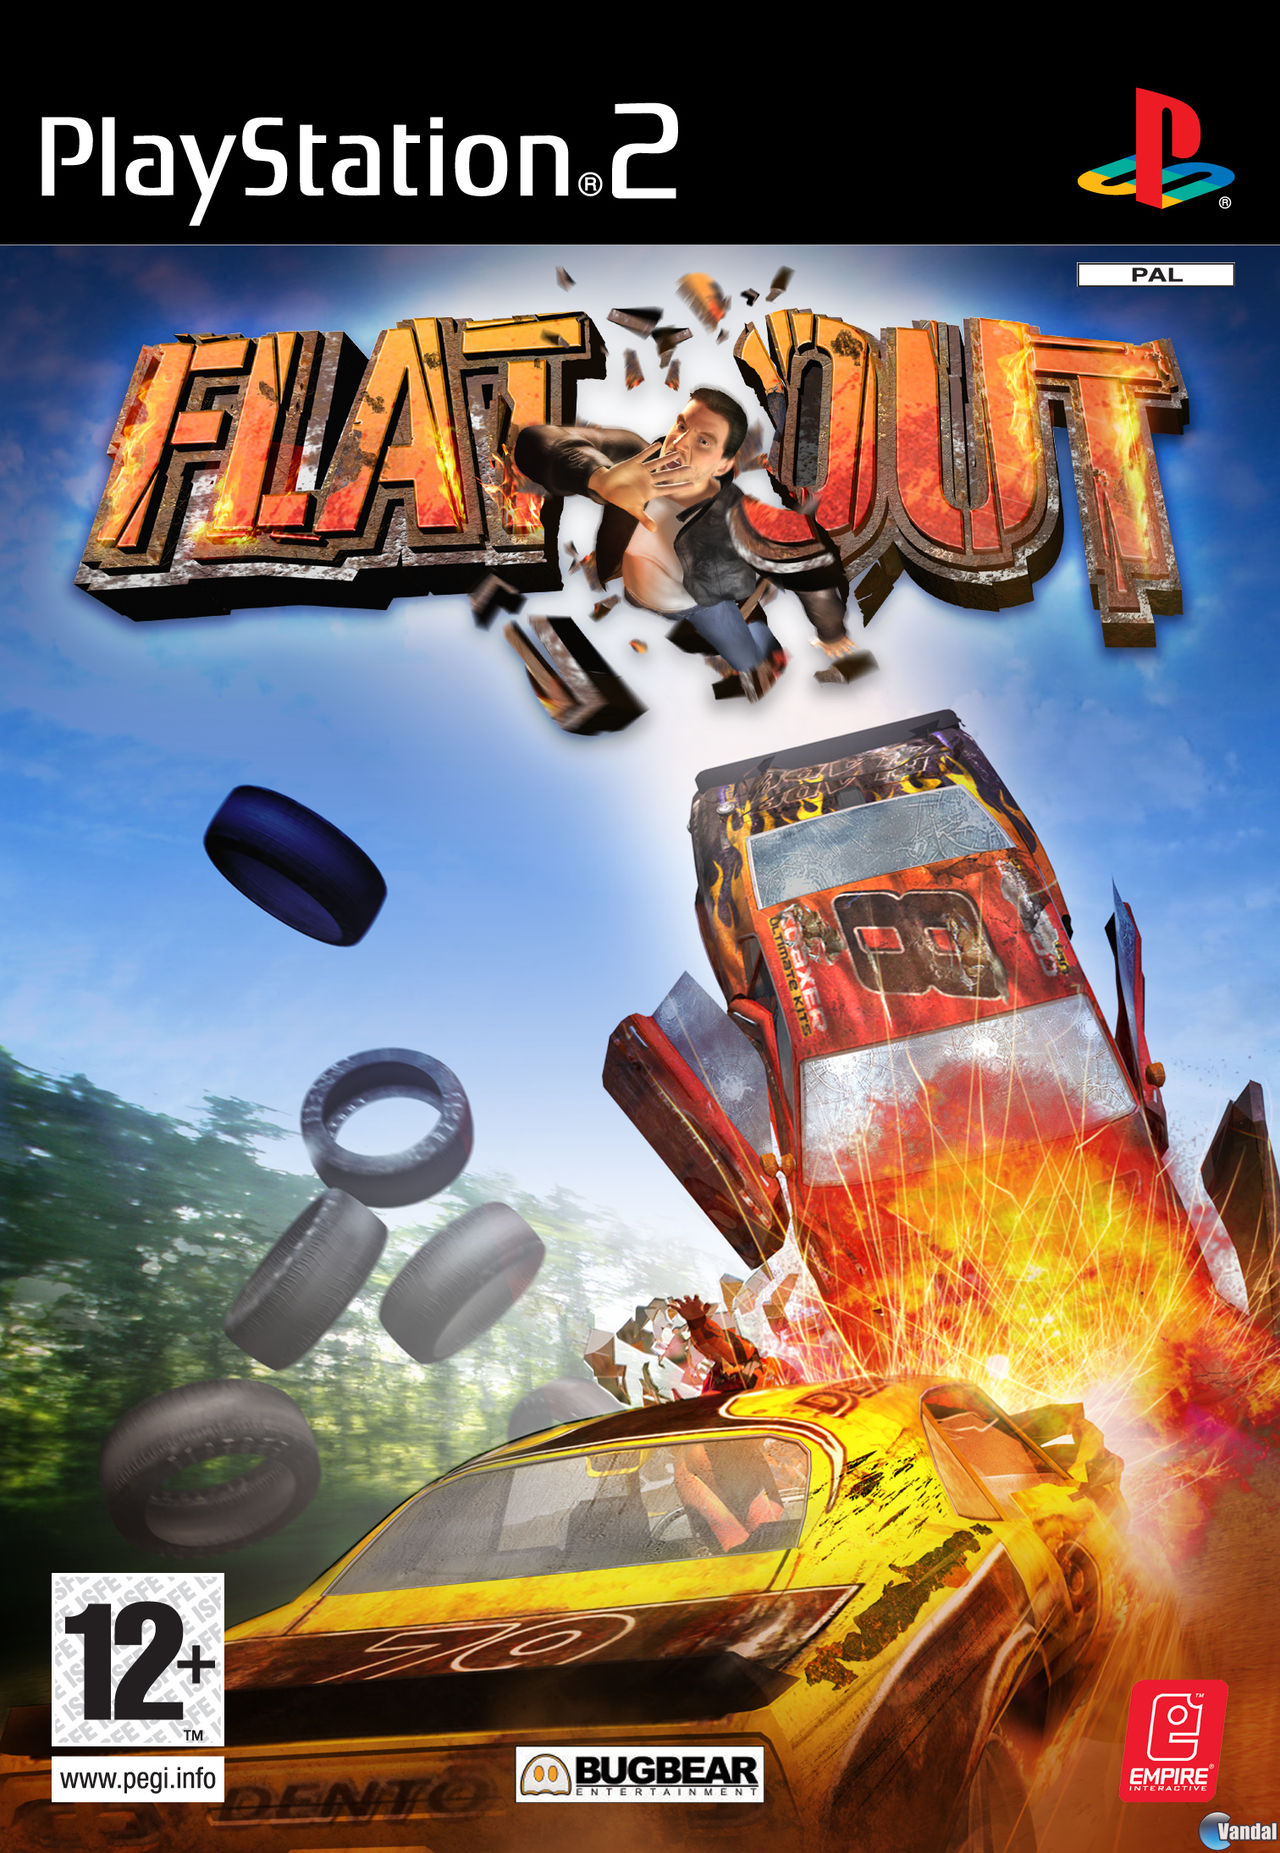 flatout video game series